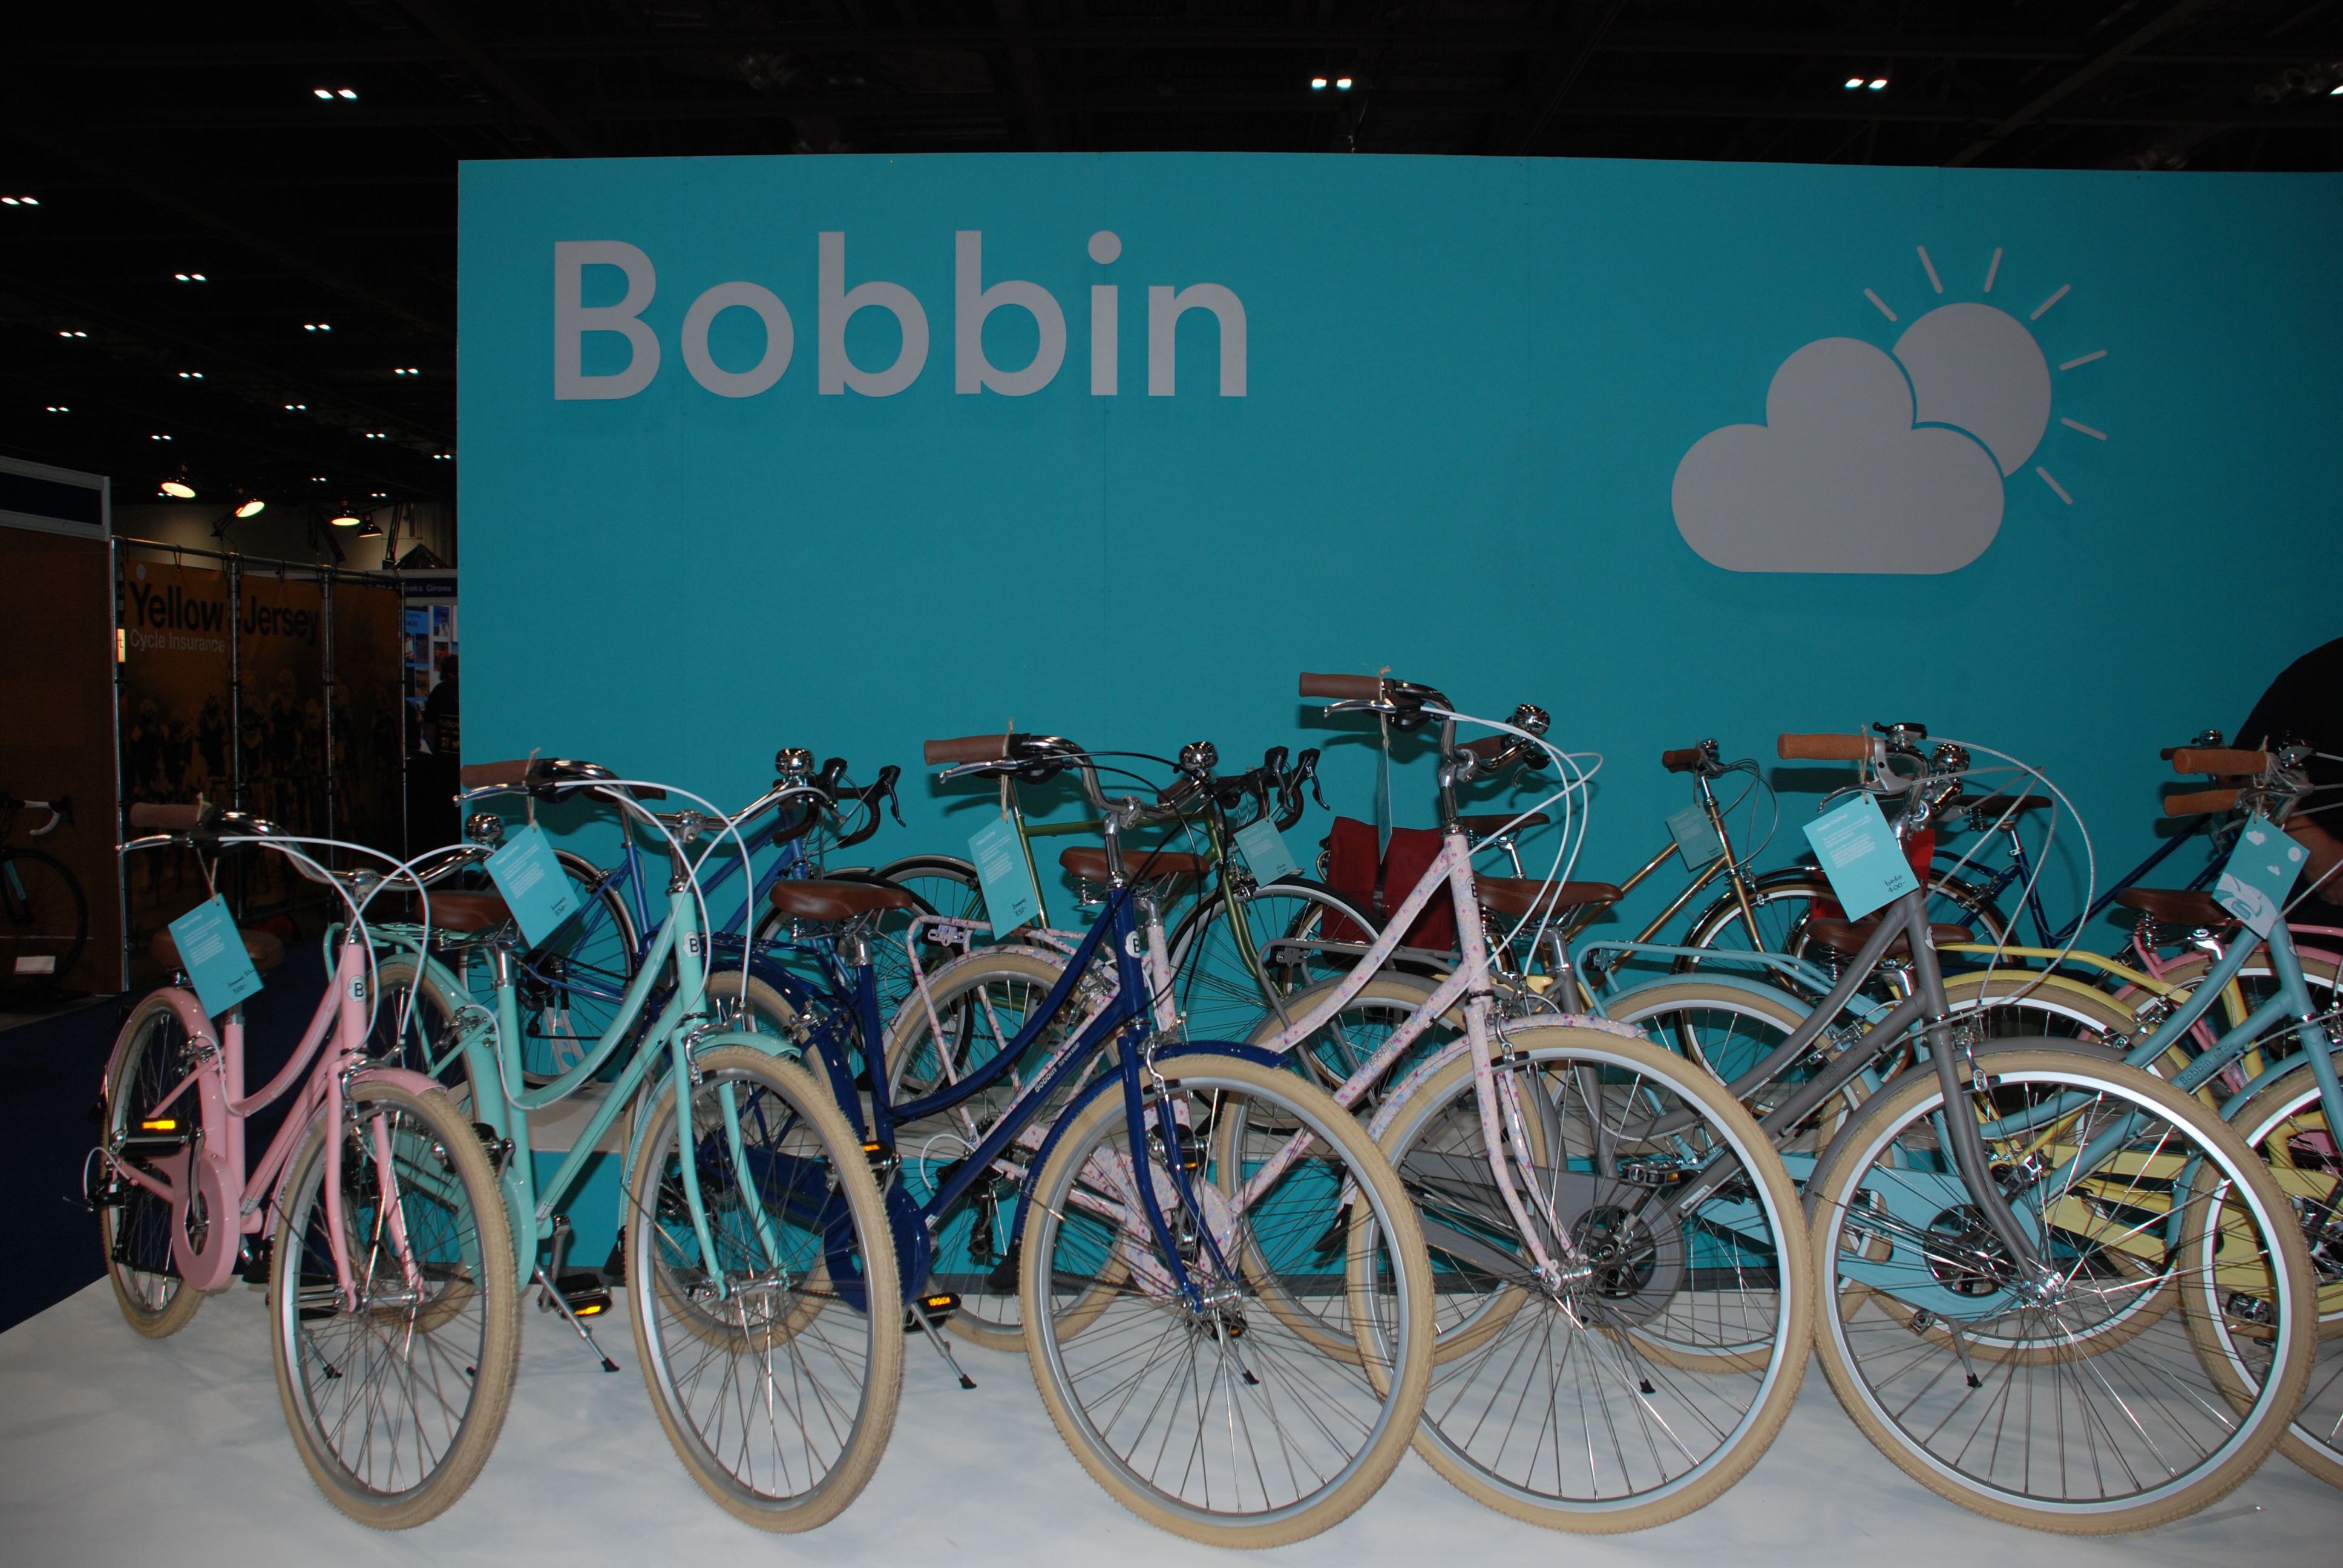 Bobbin bikes